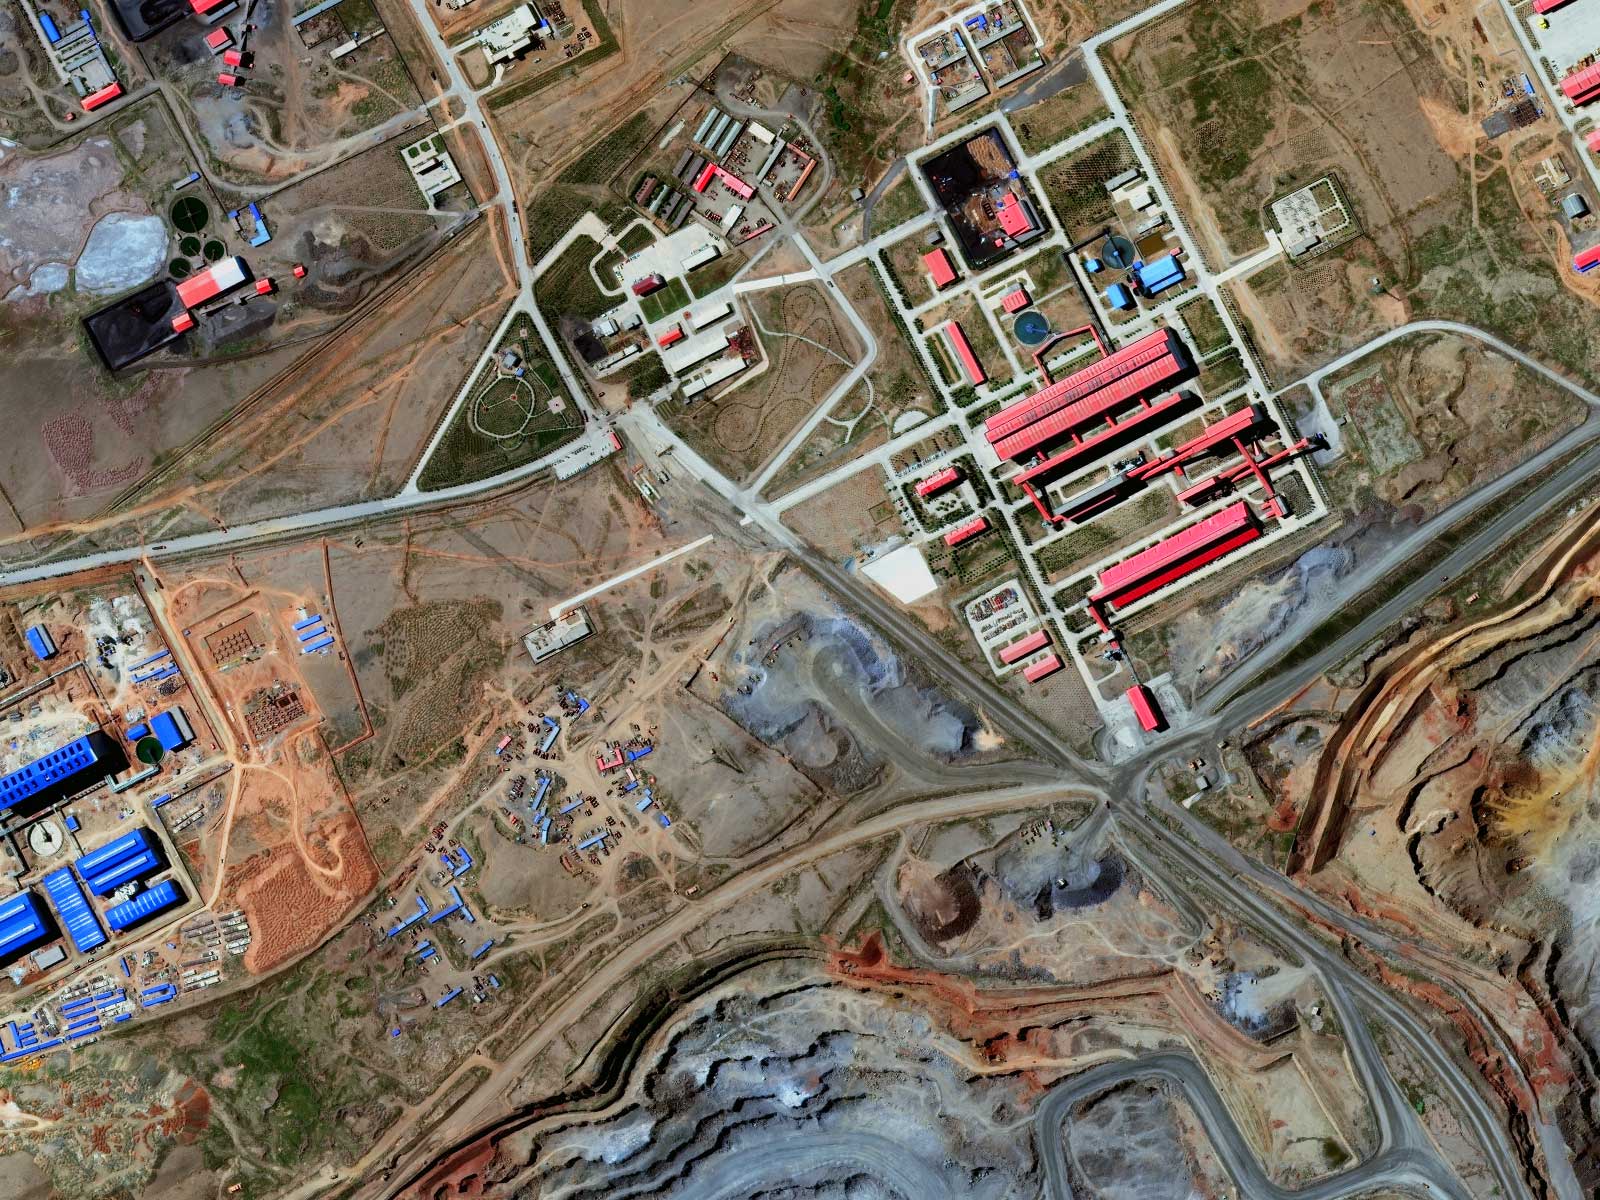 Bayan Obo Mining District, China, Aug. 23, 2014.